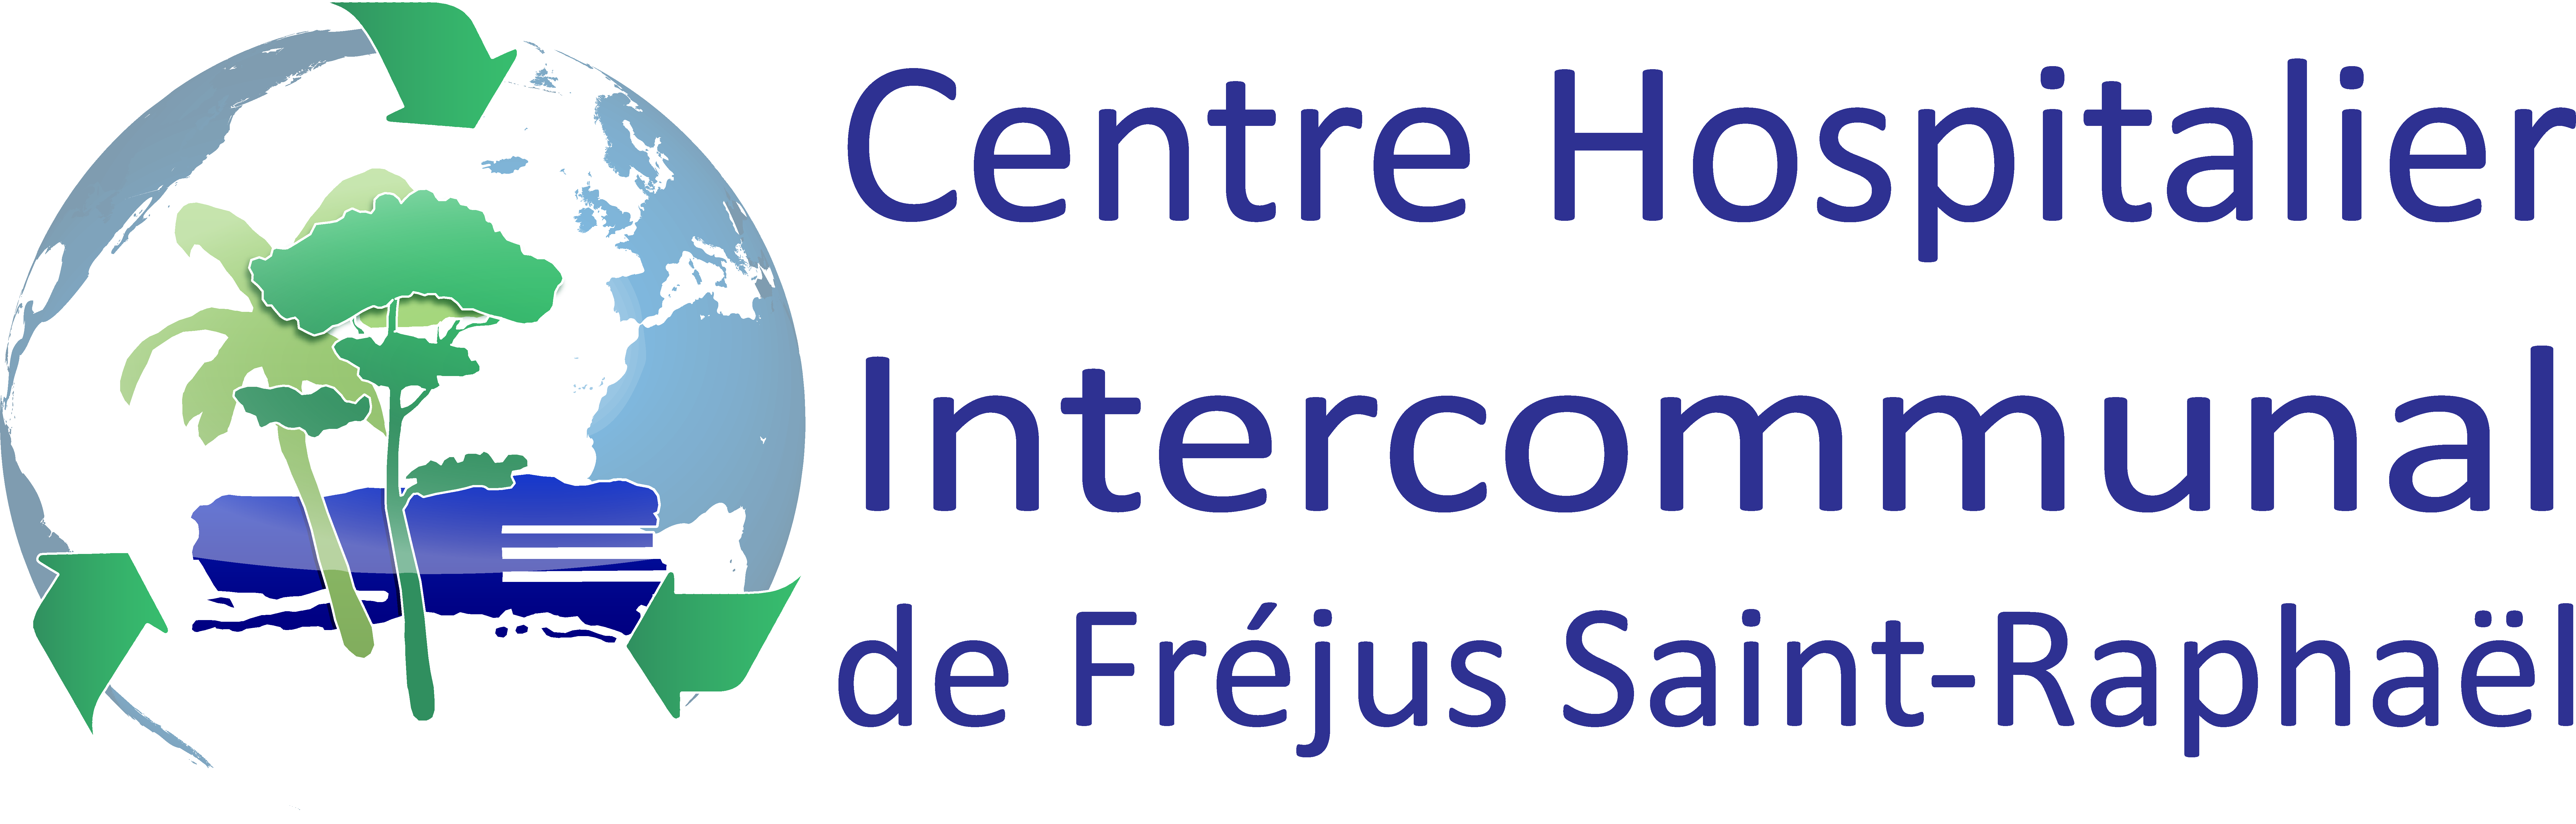 Centre Hospitalier Intercommunal de Fréjus Saint-Raphaël